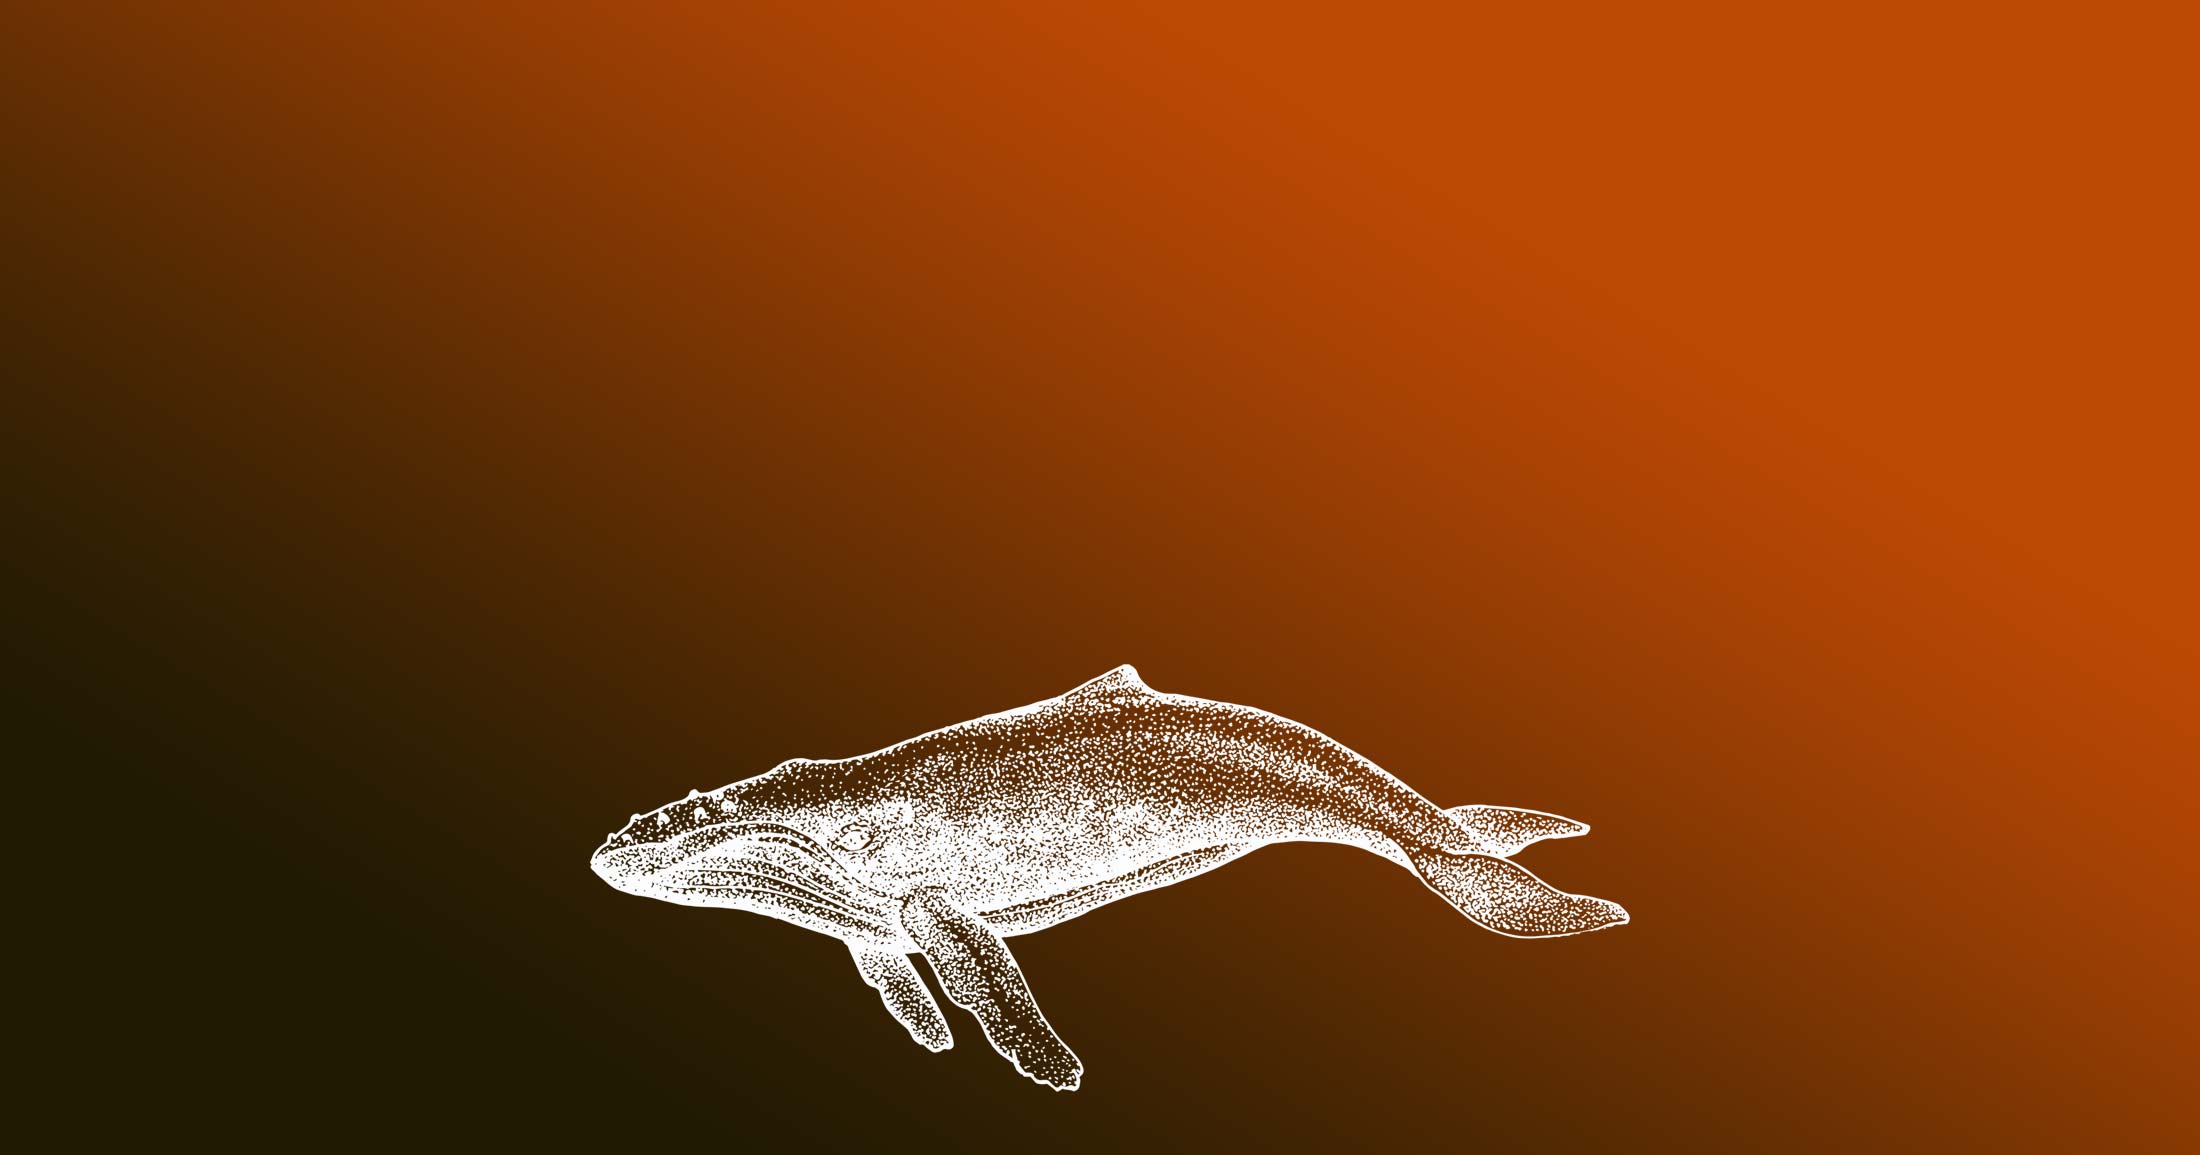 Humpback whale illustration, white on an orange background.